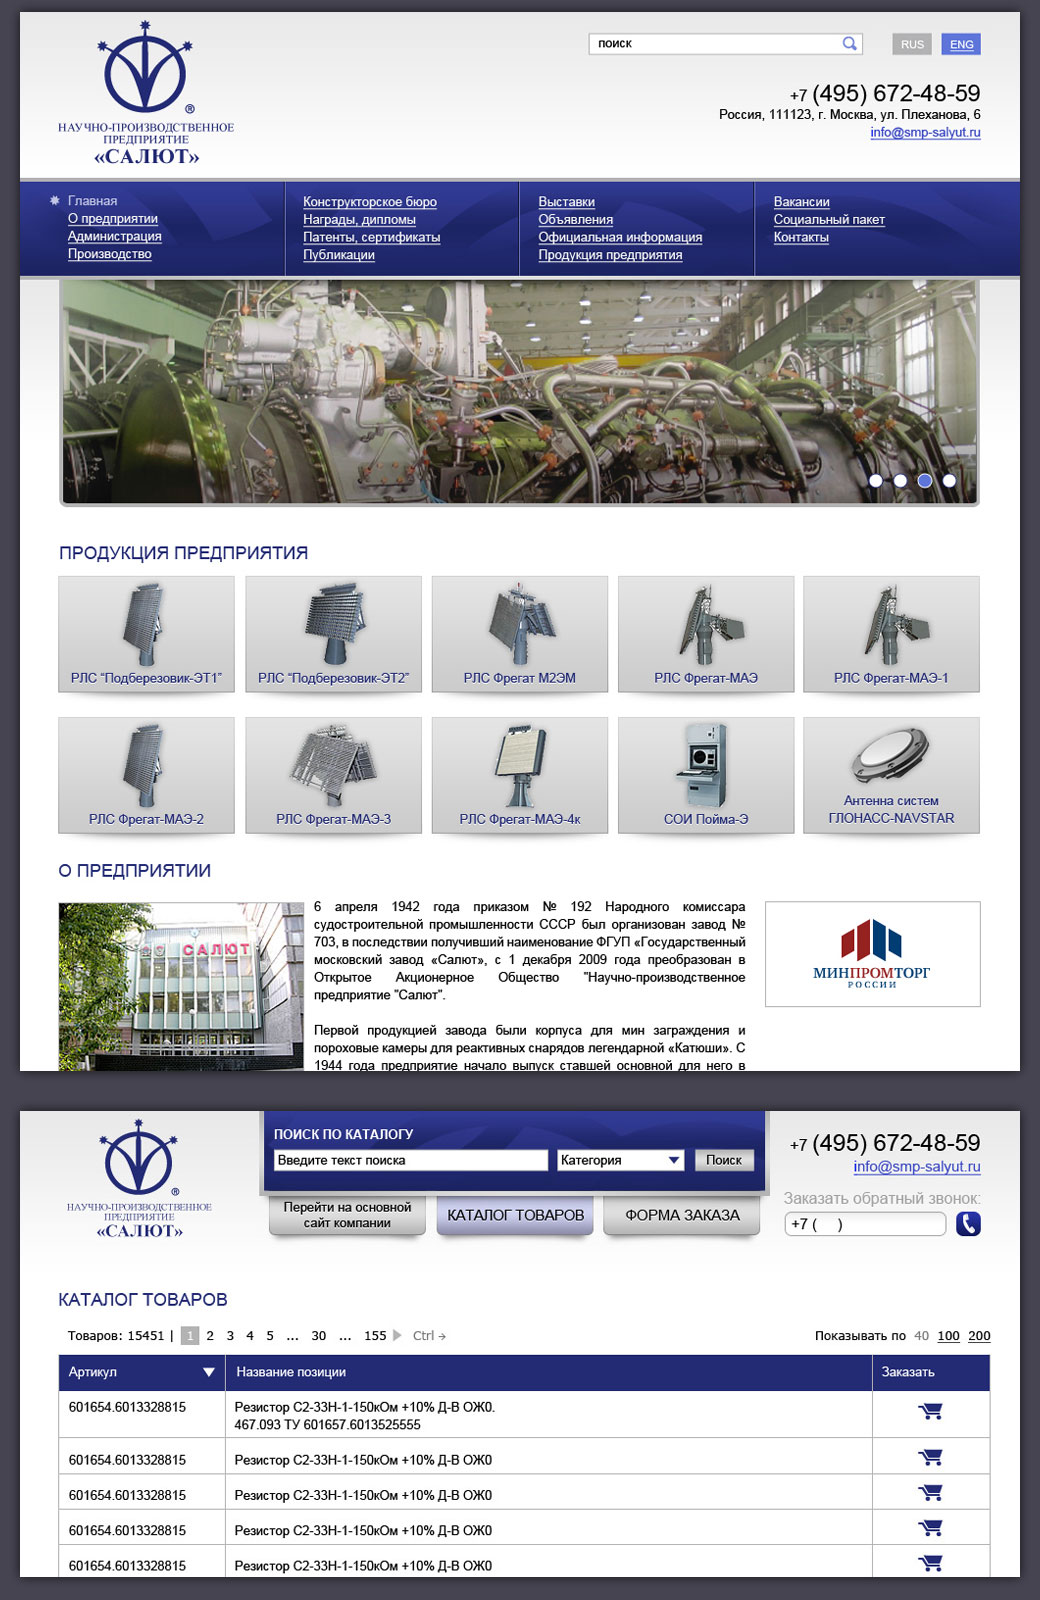 Дизайн сайта для завода «Салют»